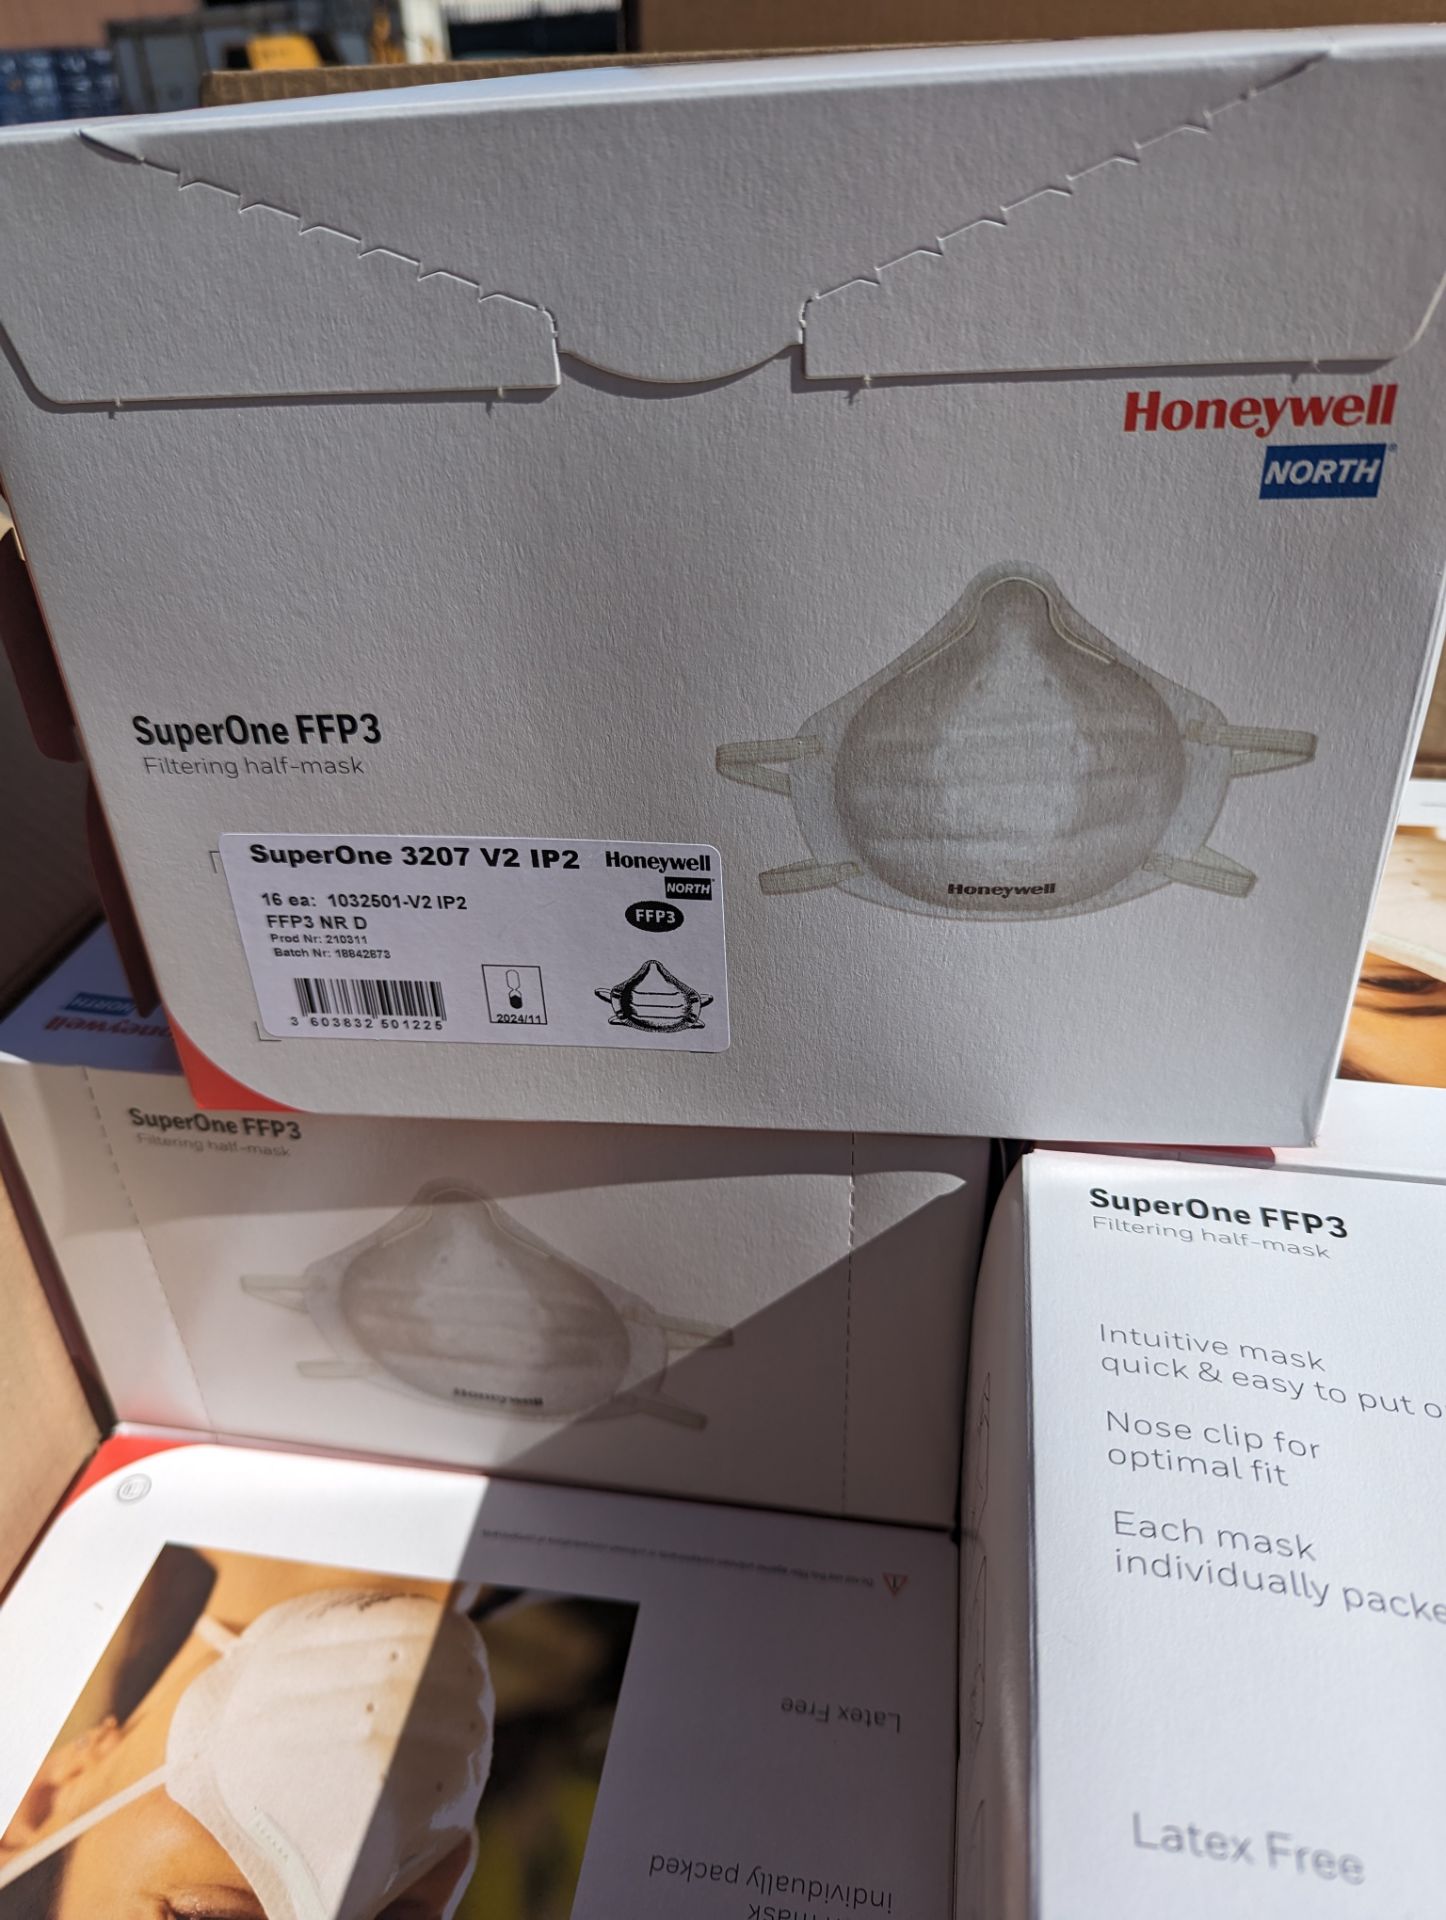 4x Boxes Honeywell SuperOne V2 ip2 FFP3 Filtering Masks, - Image 3 of 3